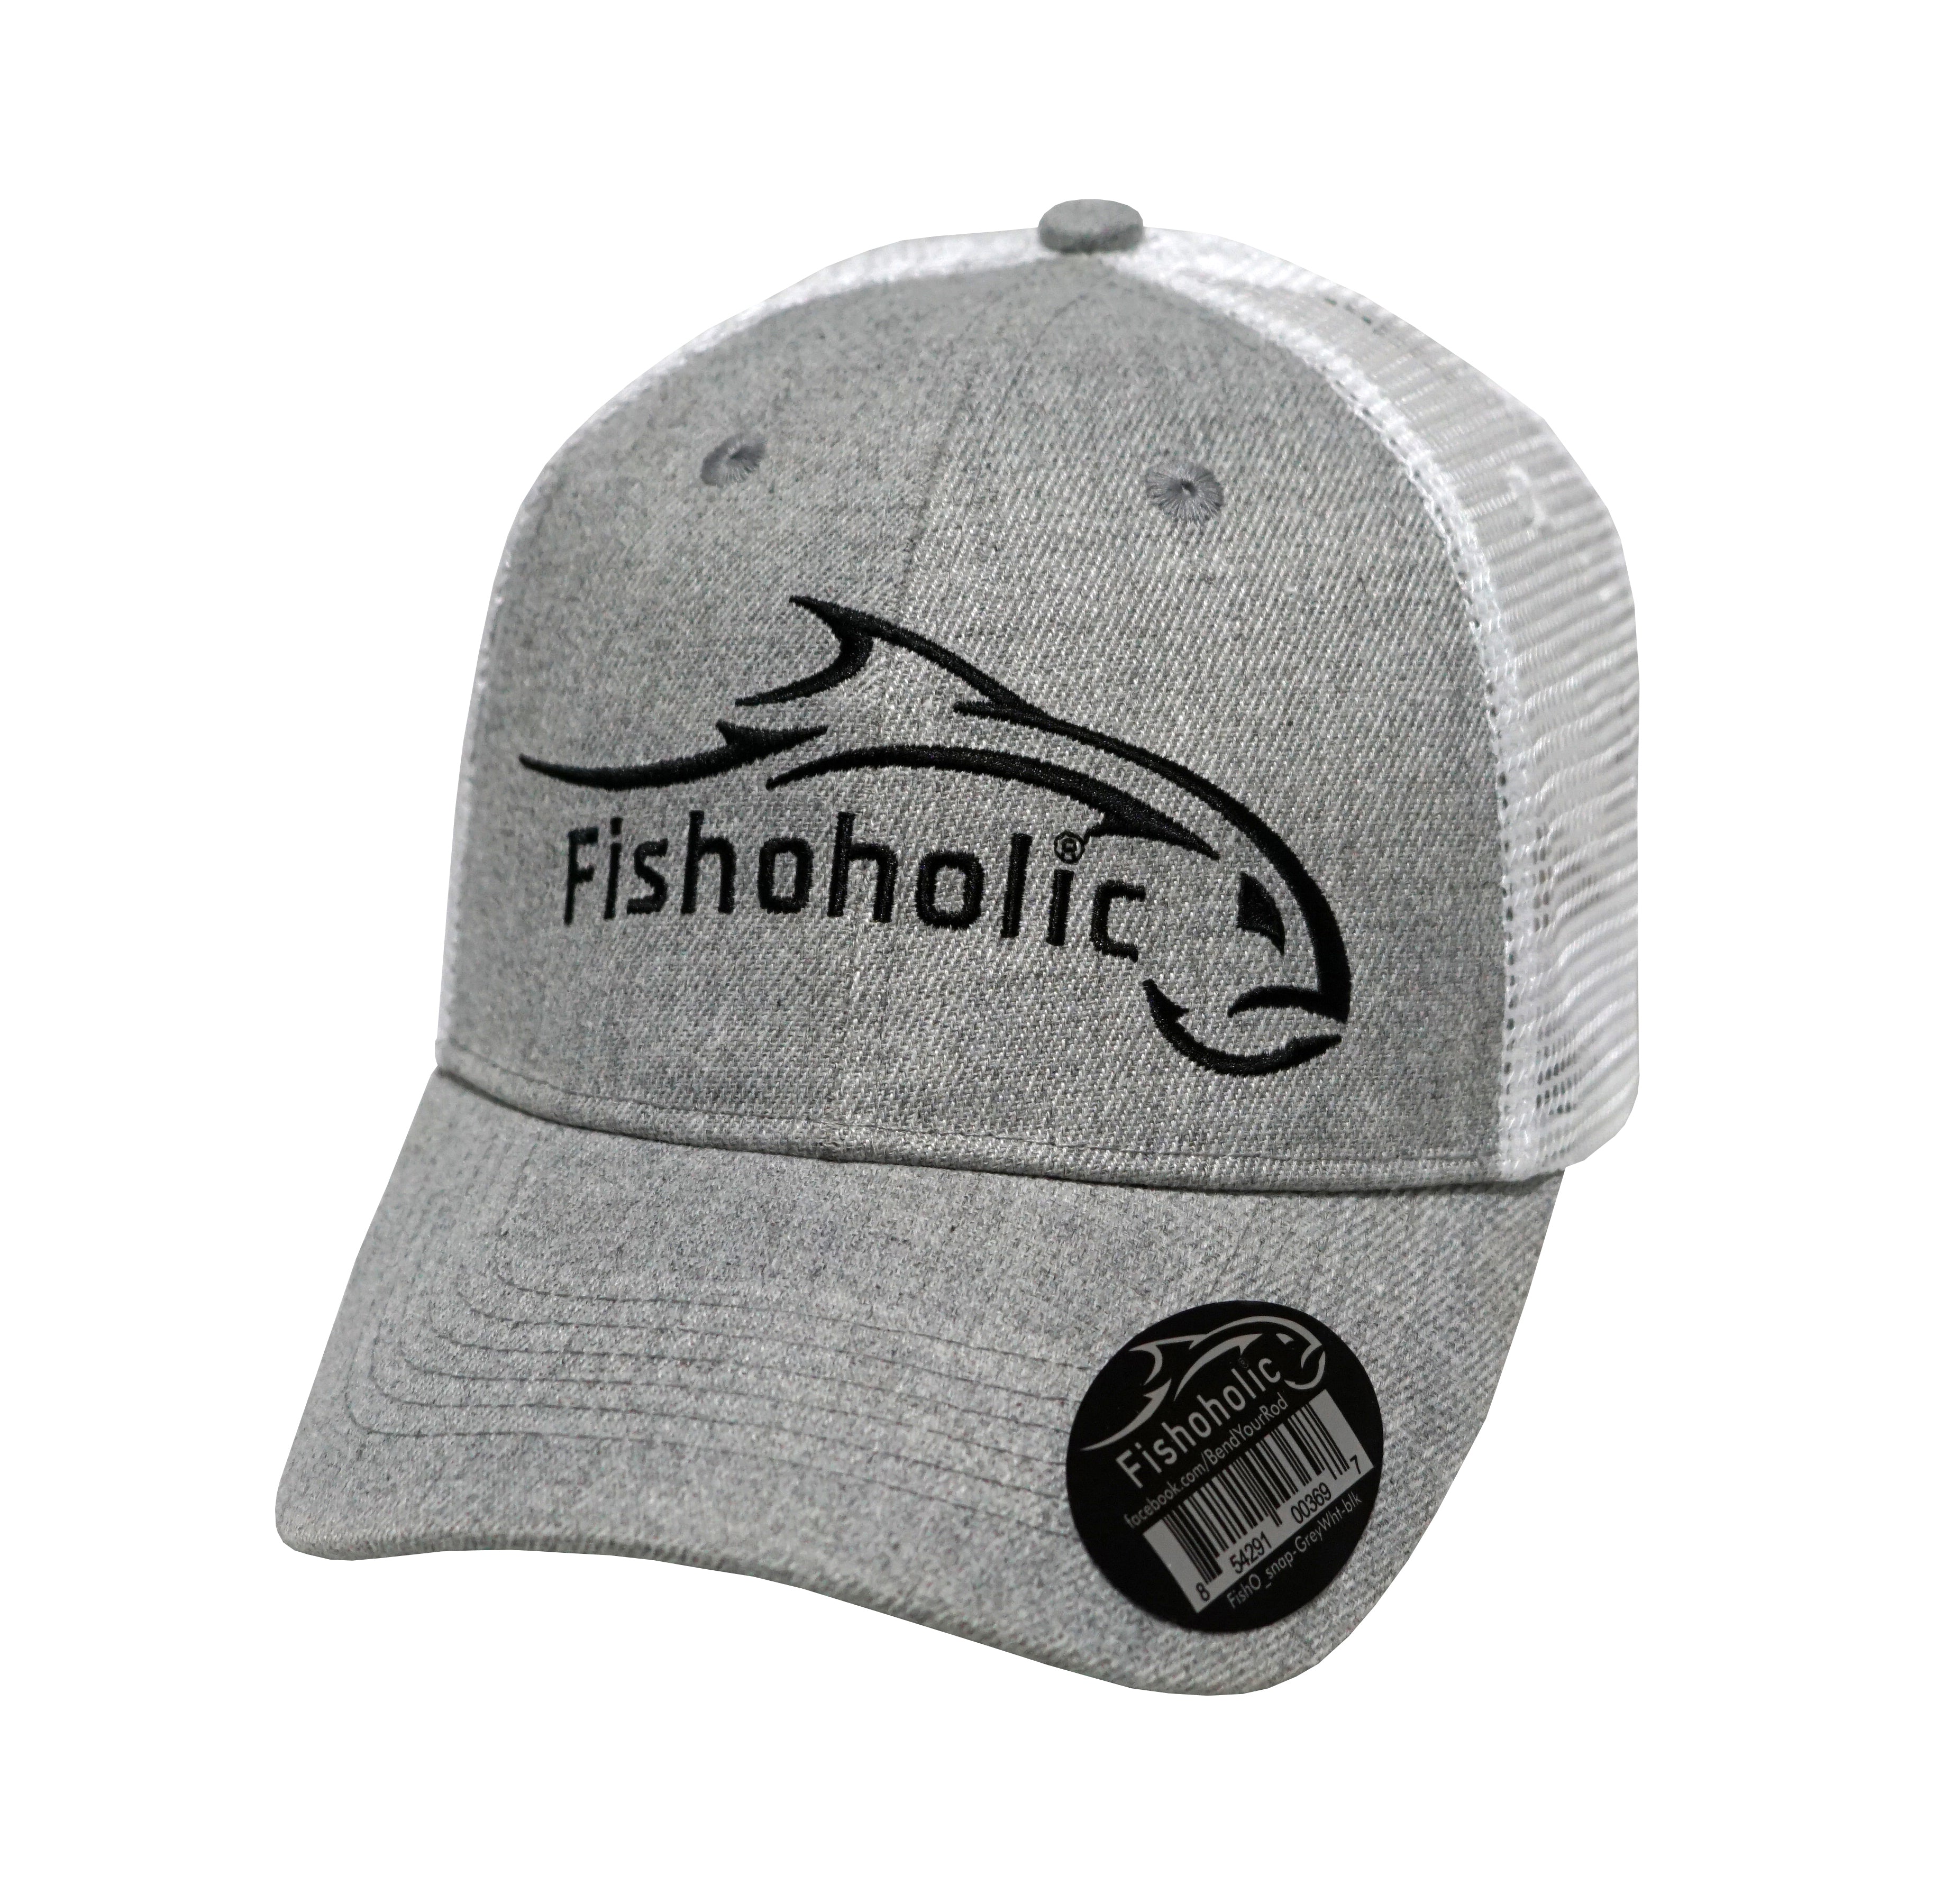 Here Fishy Fishy Fishy Twill Cap - Fishing Hook High-Profile Snapback Hat -  Fishing Lover Trucker Hat